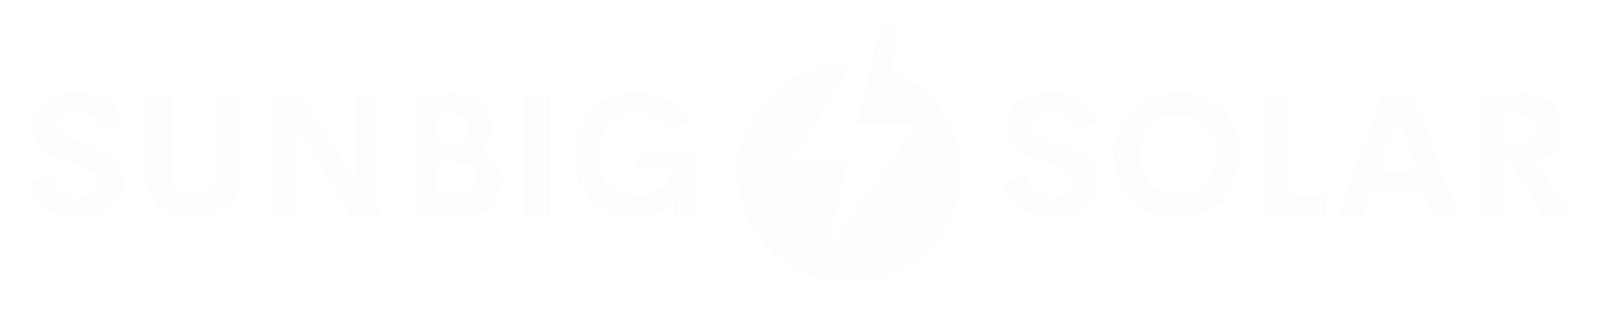 sunbig_logo